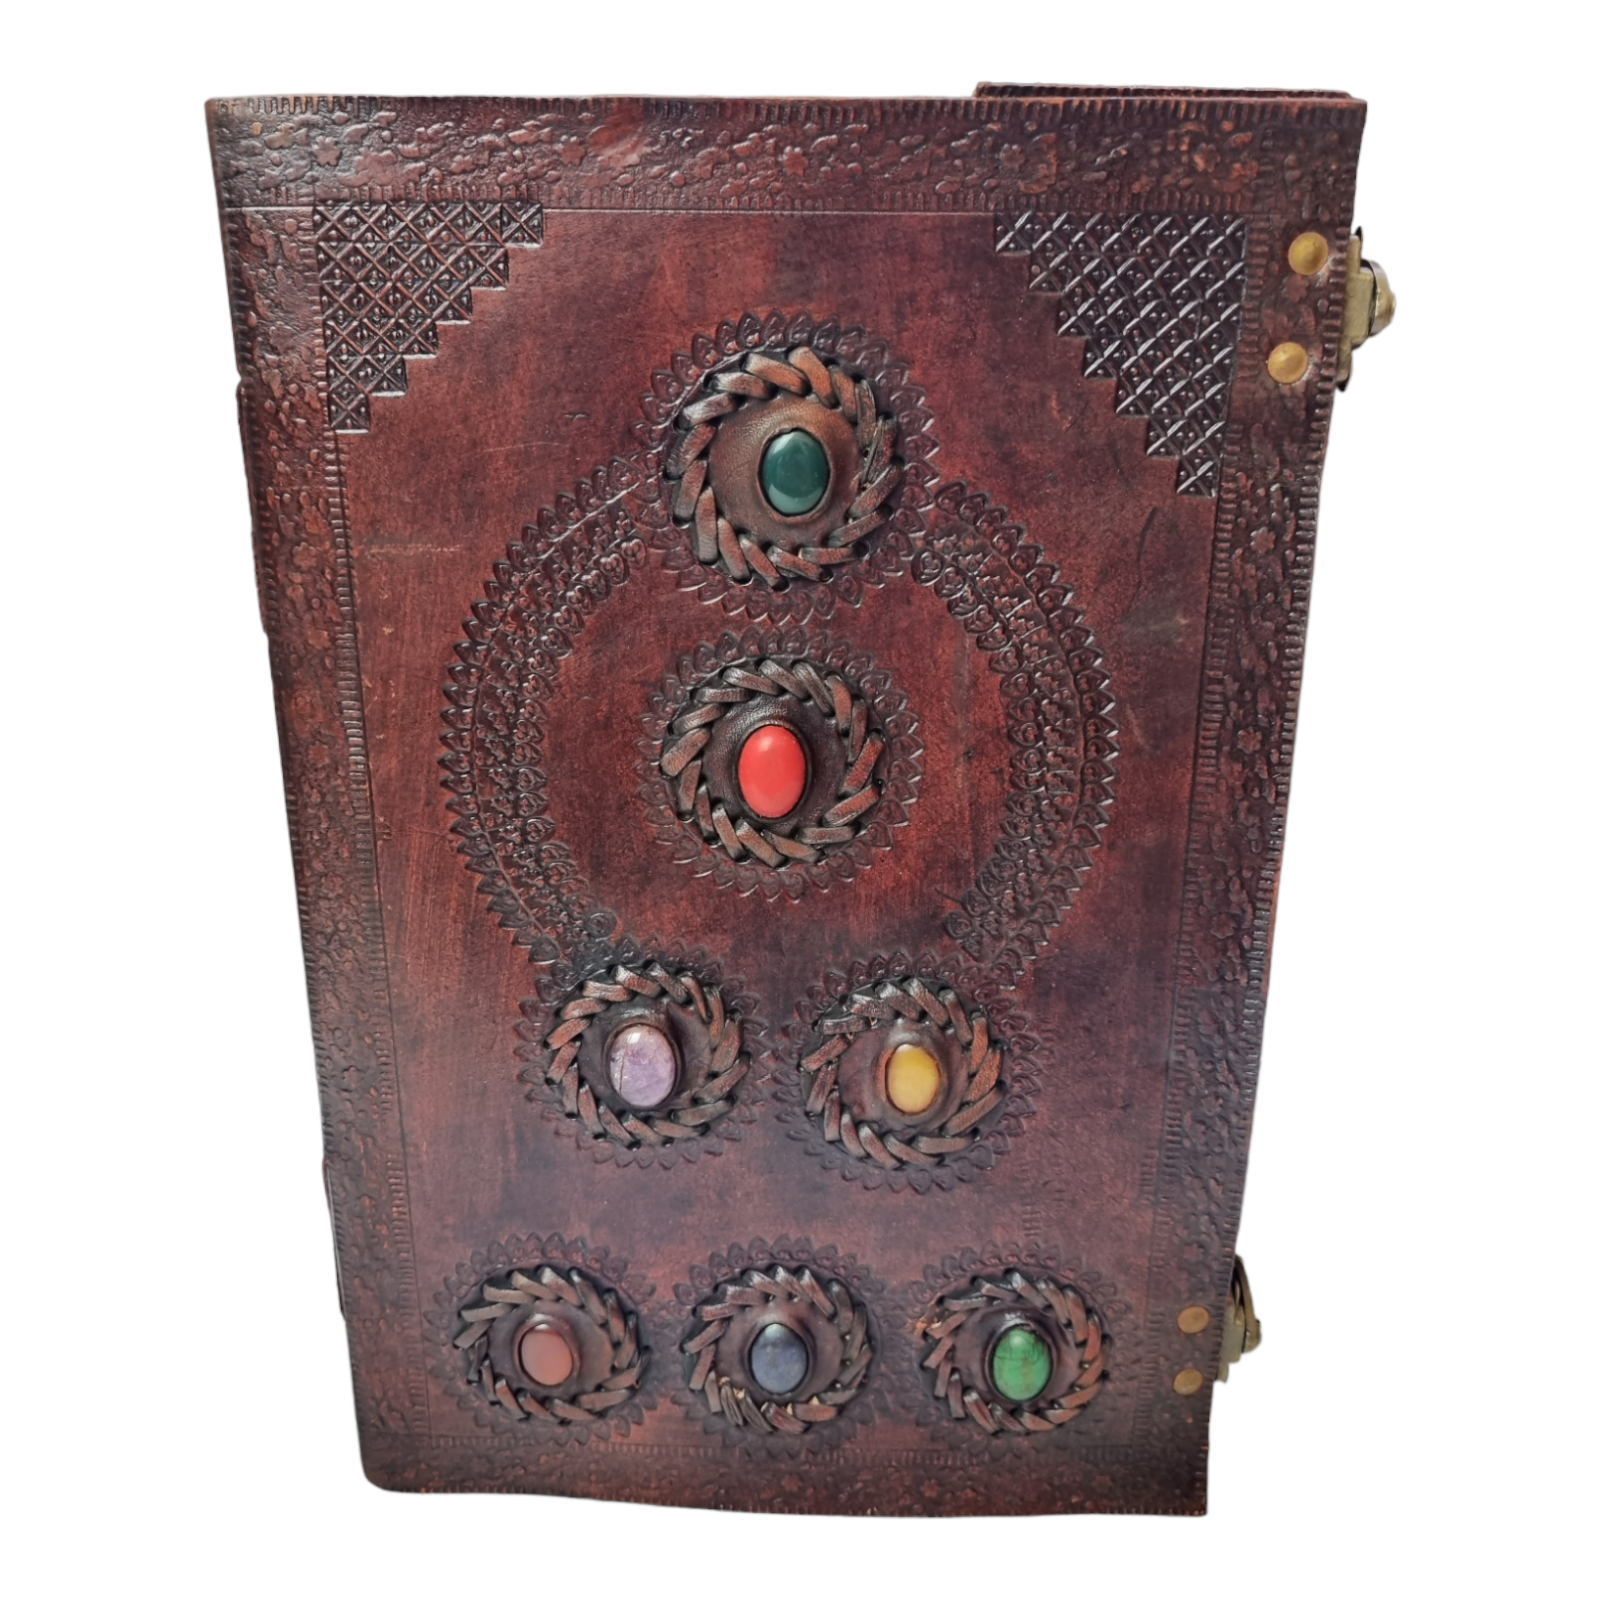 Leather Journal Book Notebook Spell handmade 7 stones Gemstone XL 30cm x 20cm